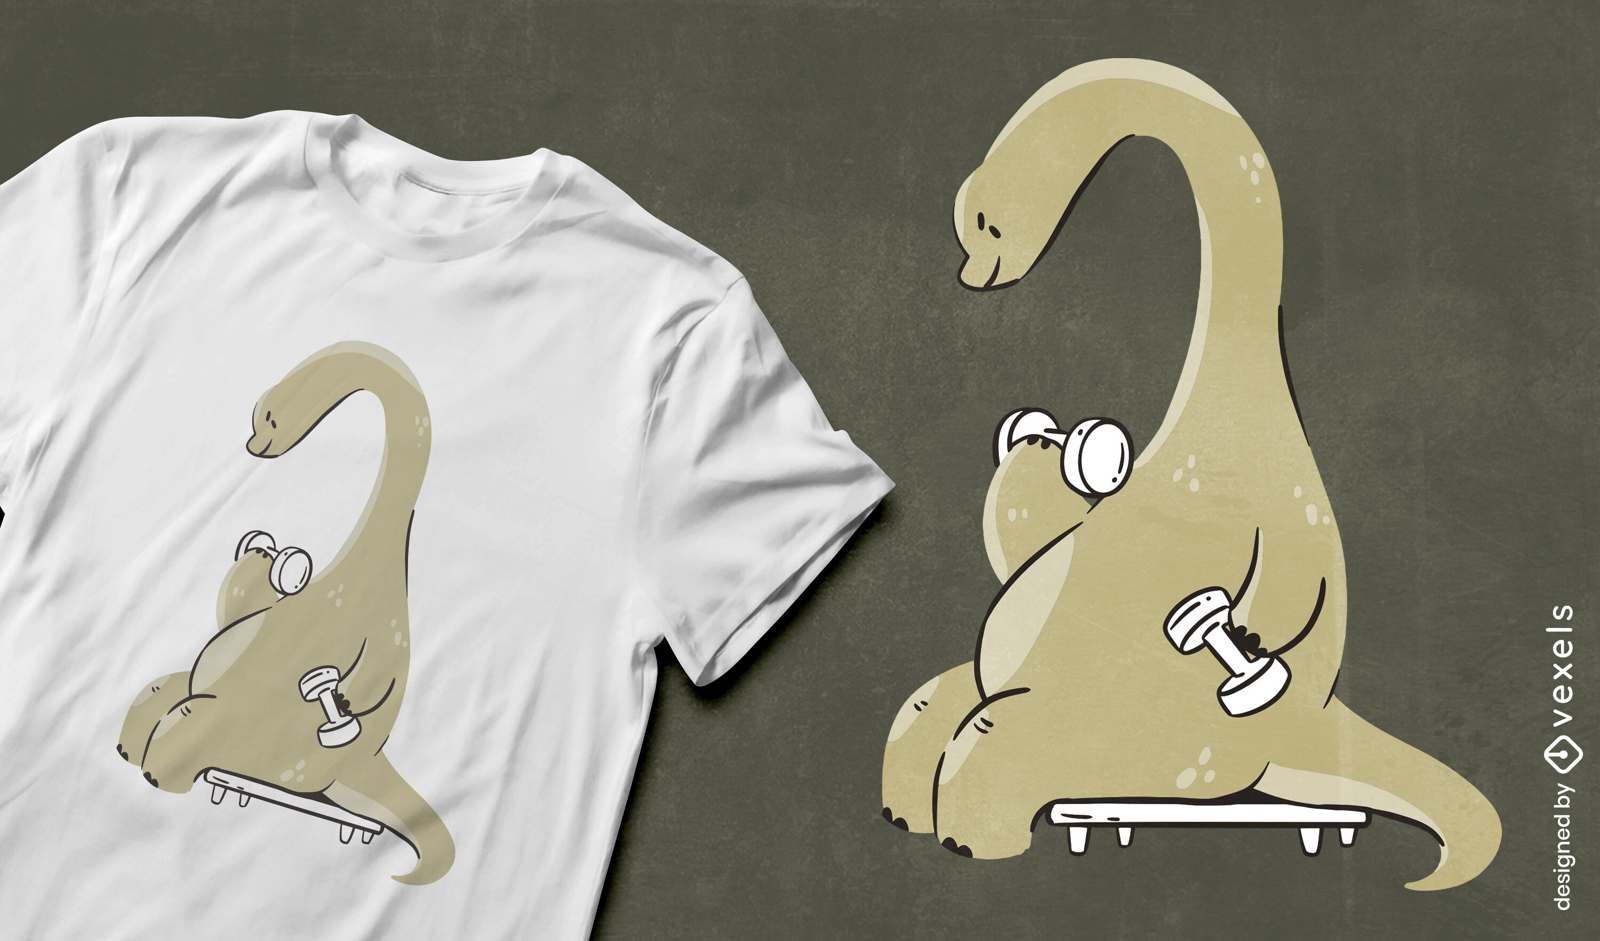 Gym dinosaur t-shirt design